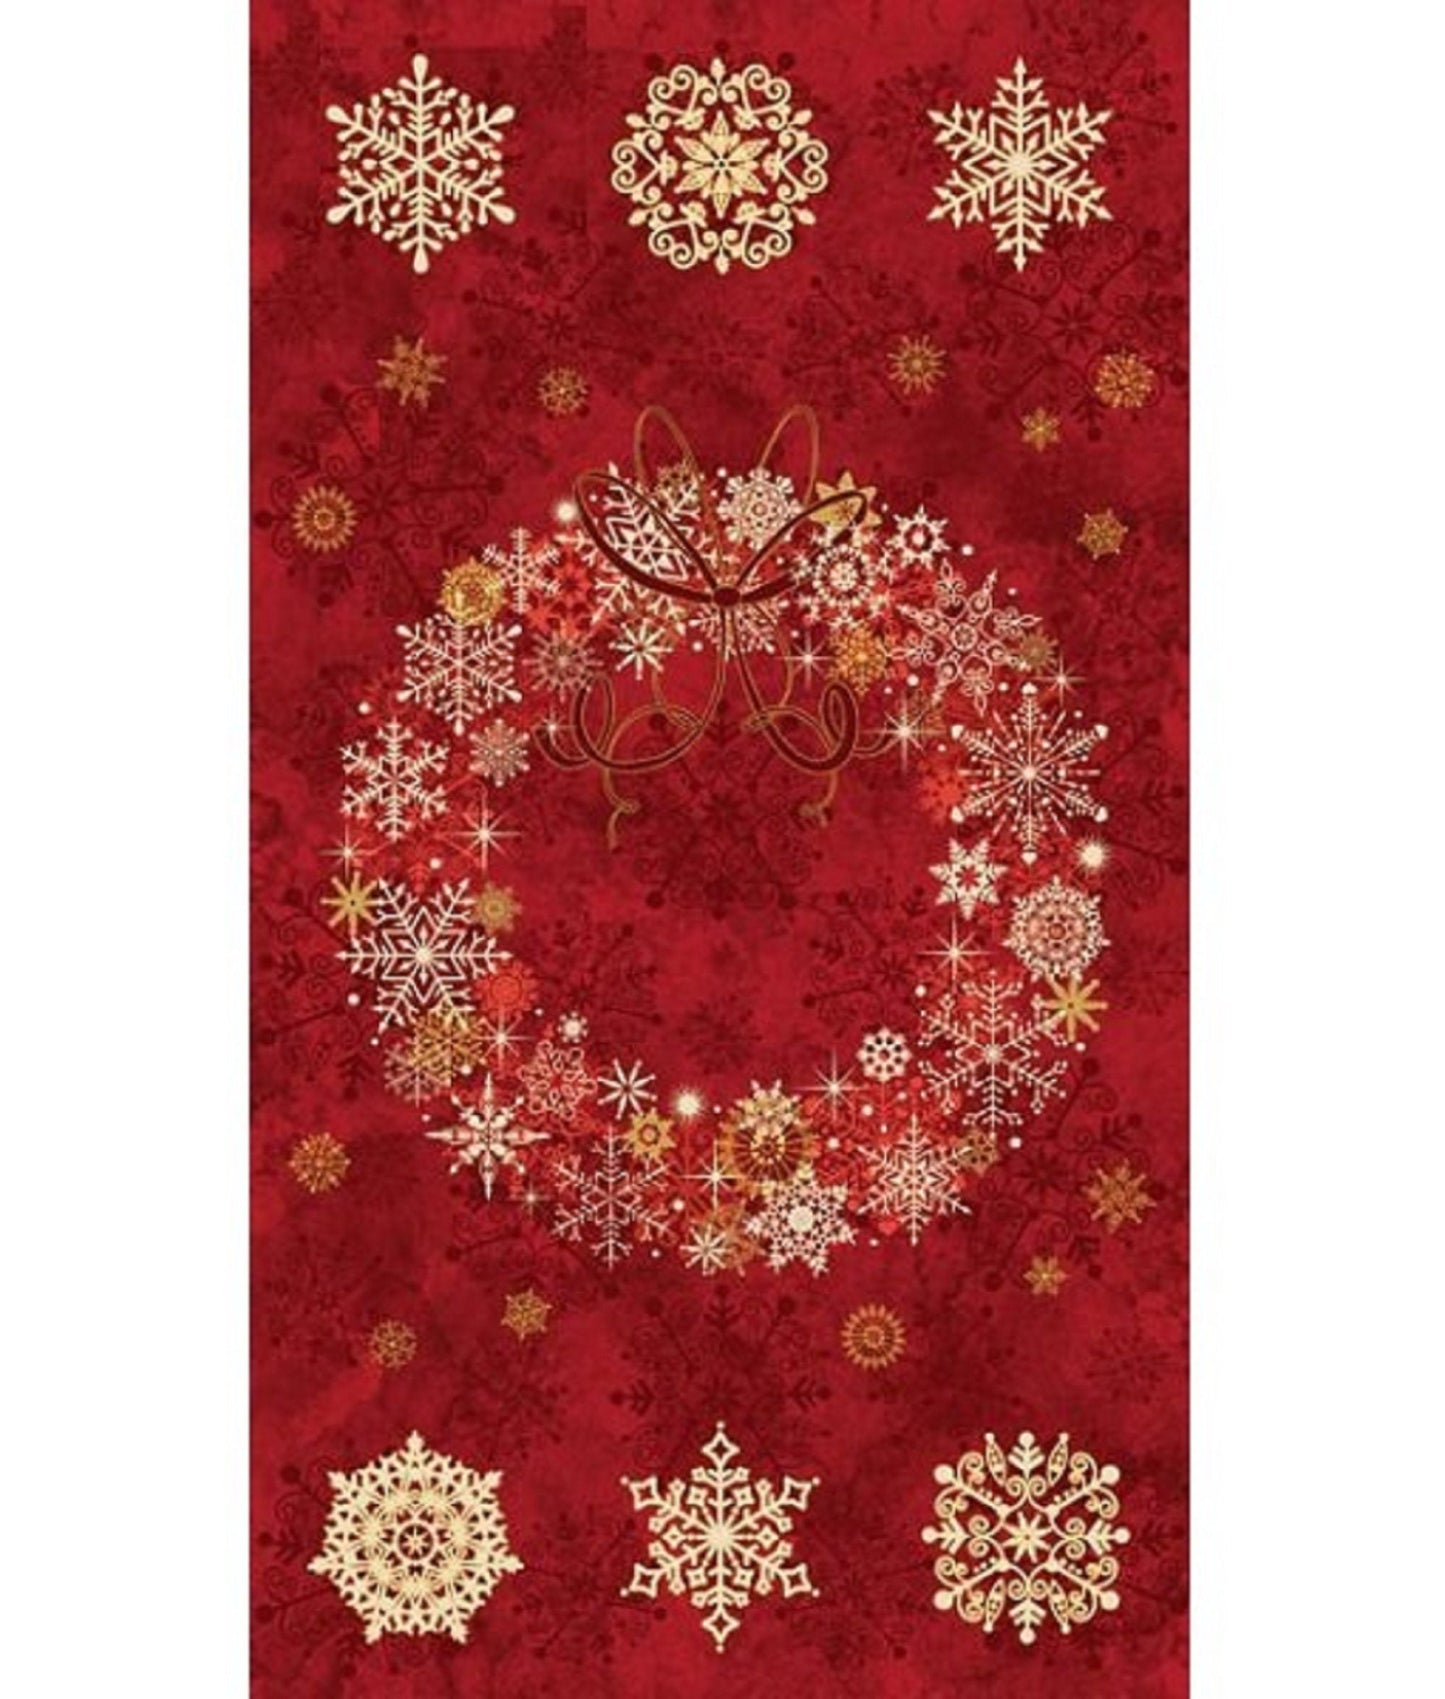 Starry Night II "Red Wreath" Panel by Northcott Fabrics